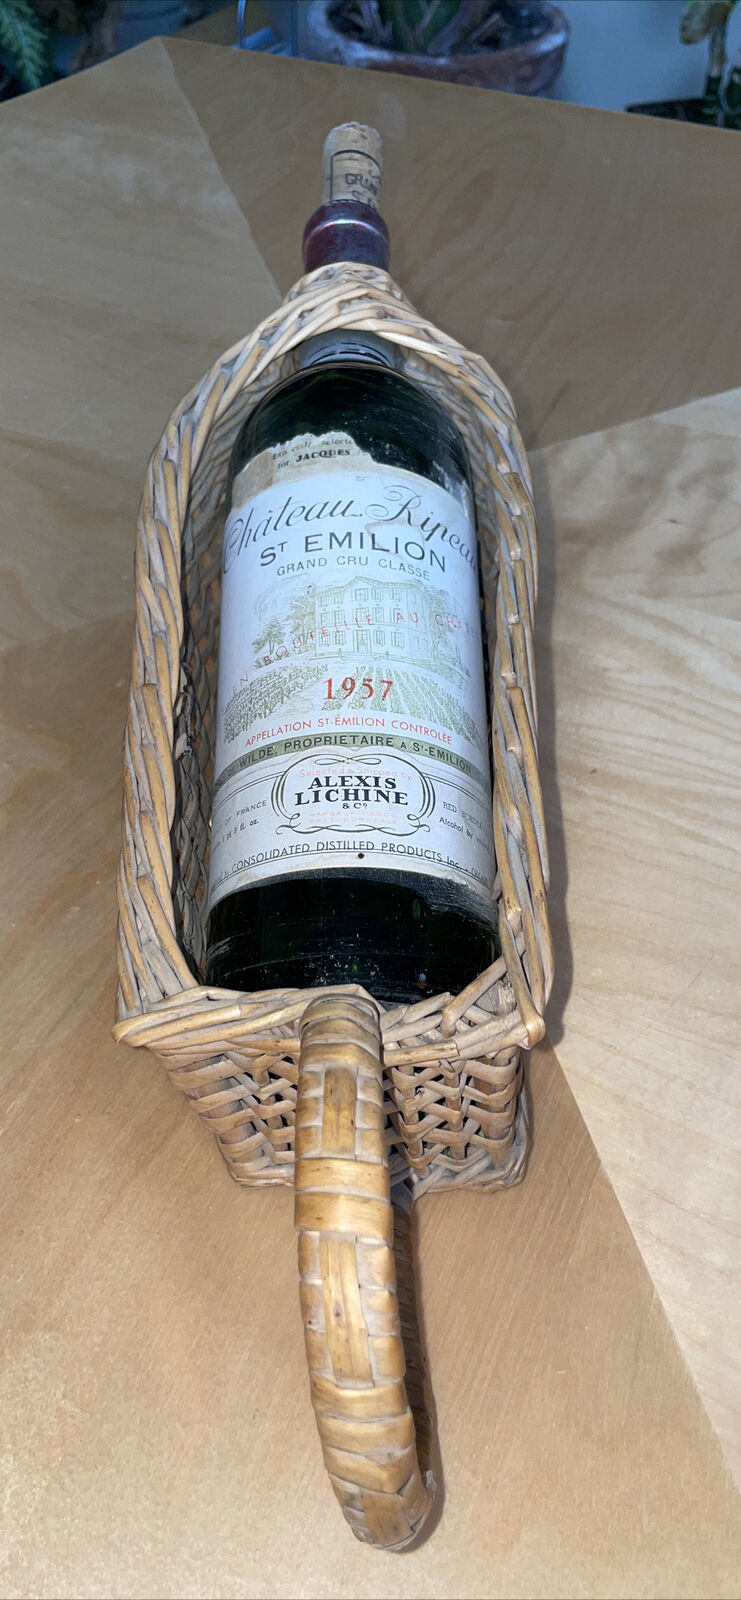 1957 Chateau Ripeau St Emilion Empty Wine Bottle Wicker Basket Cork A Lichine